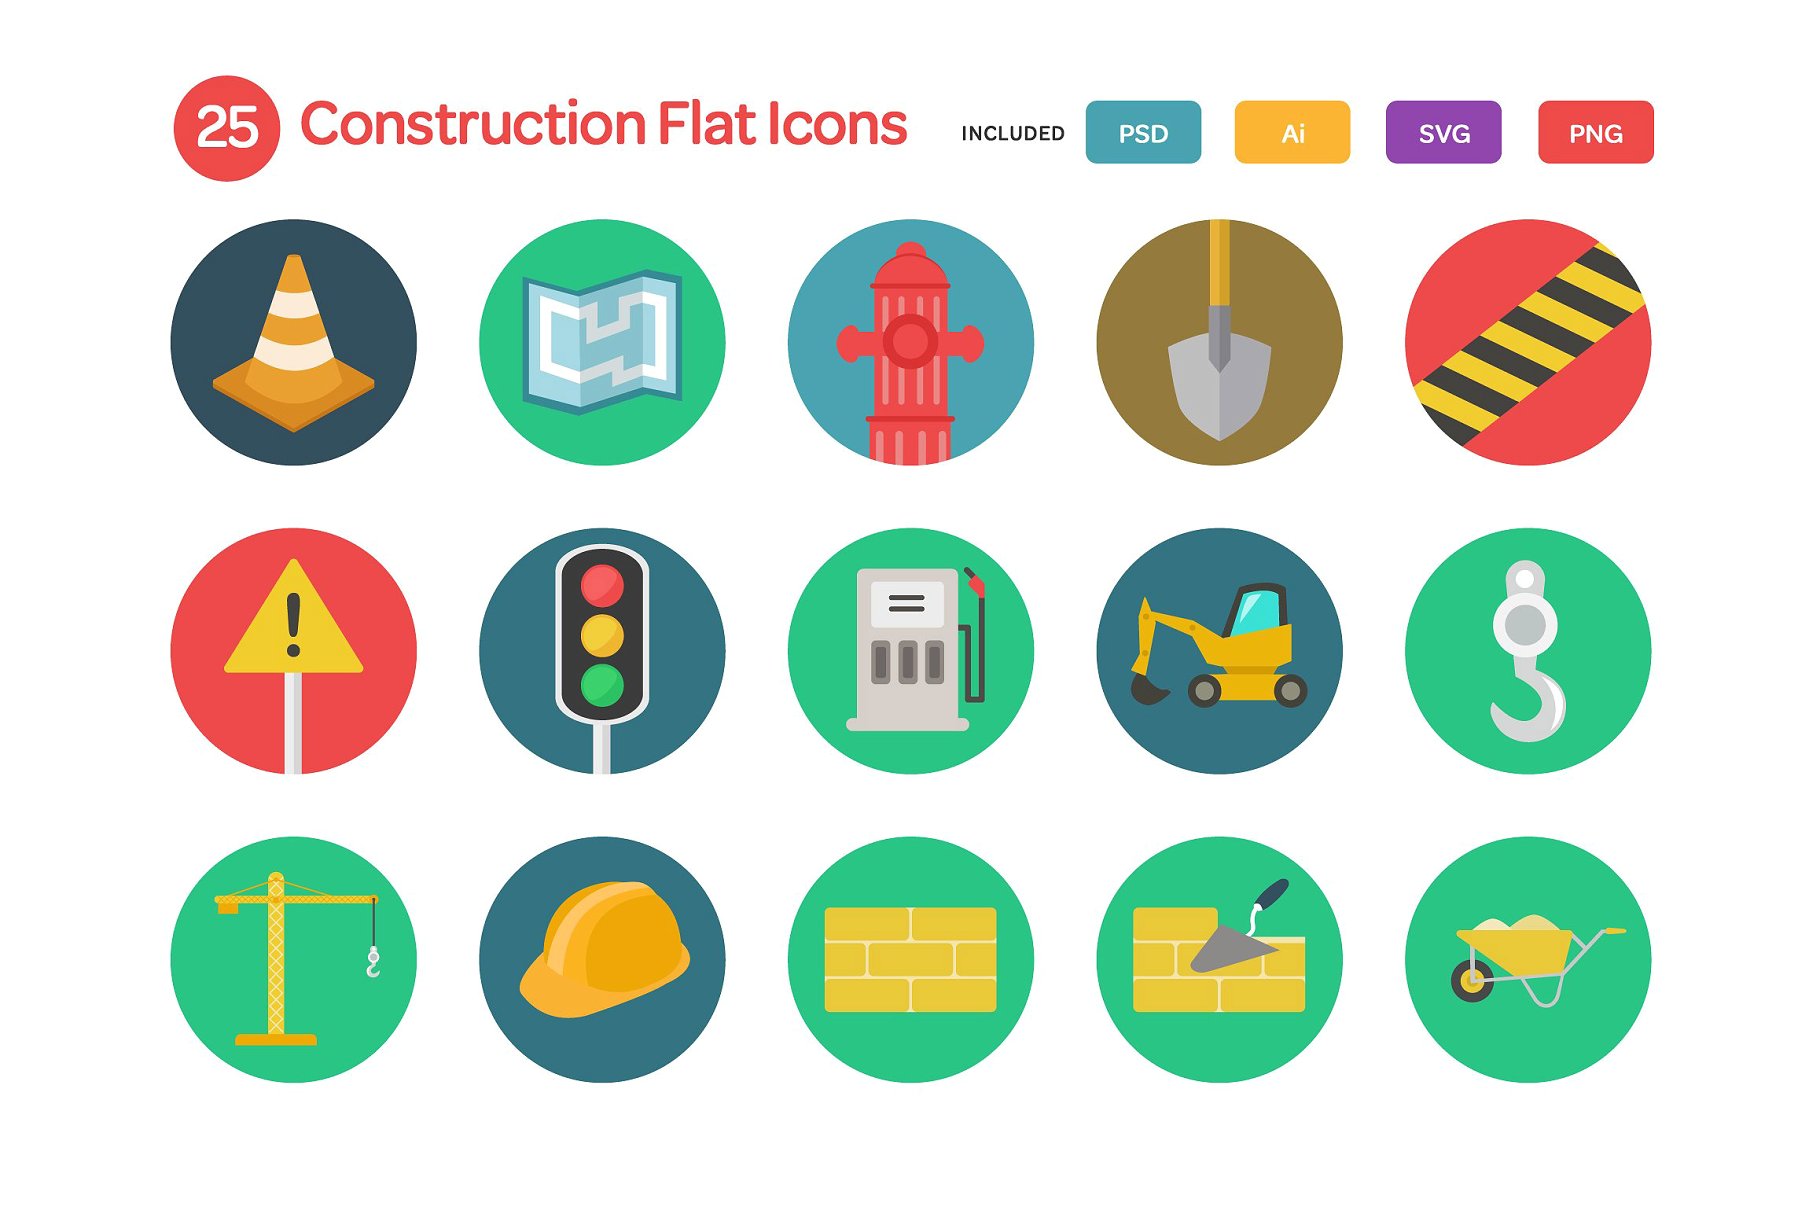 健身矢量图标 Construction Flat Icons